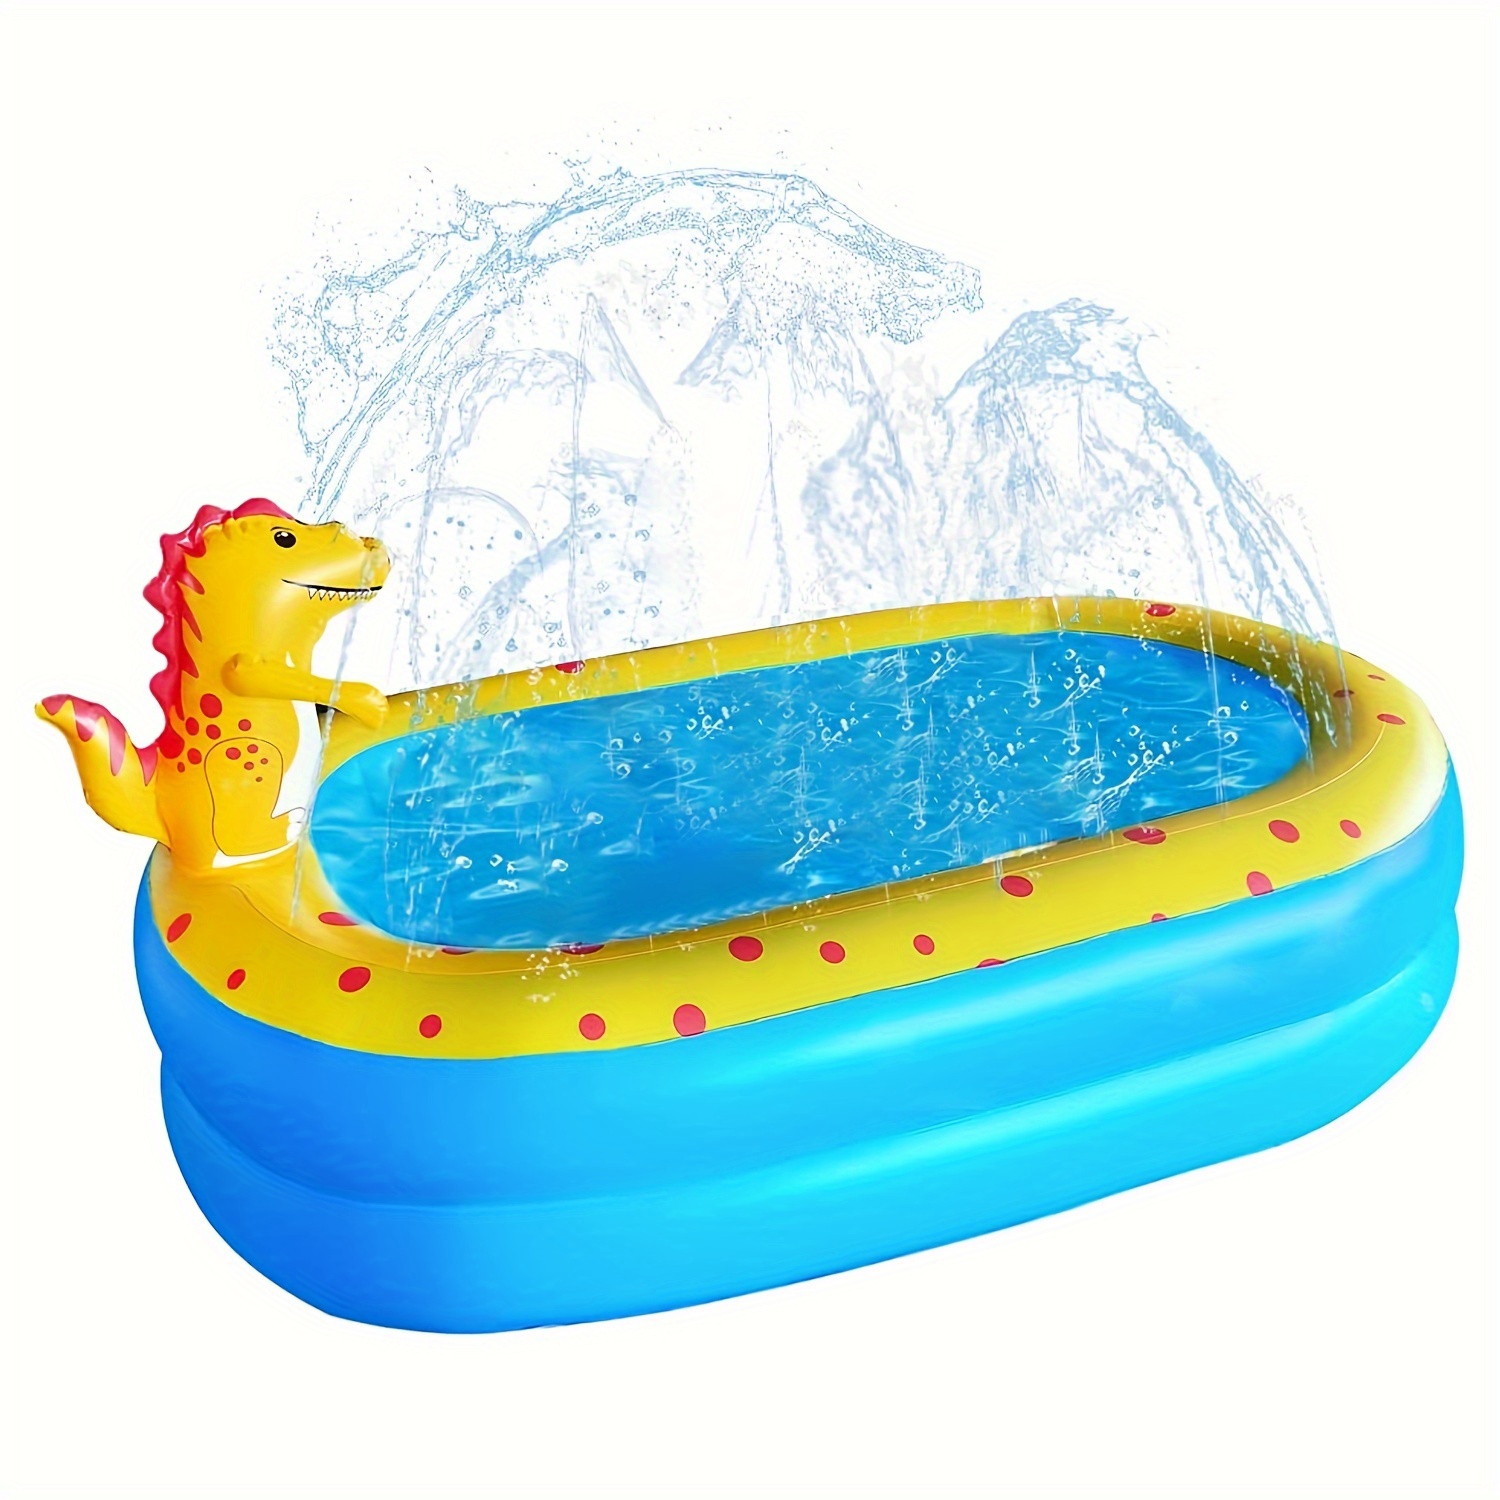 

Large Inflatable Sprinkler Swimming Pool, 170*103*90cm/67*41*35in Heightened & Thickened Cute Sprinkler Pool, Family Splash Pad Swimming Water Pool For Outdoor Backyard